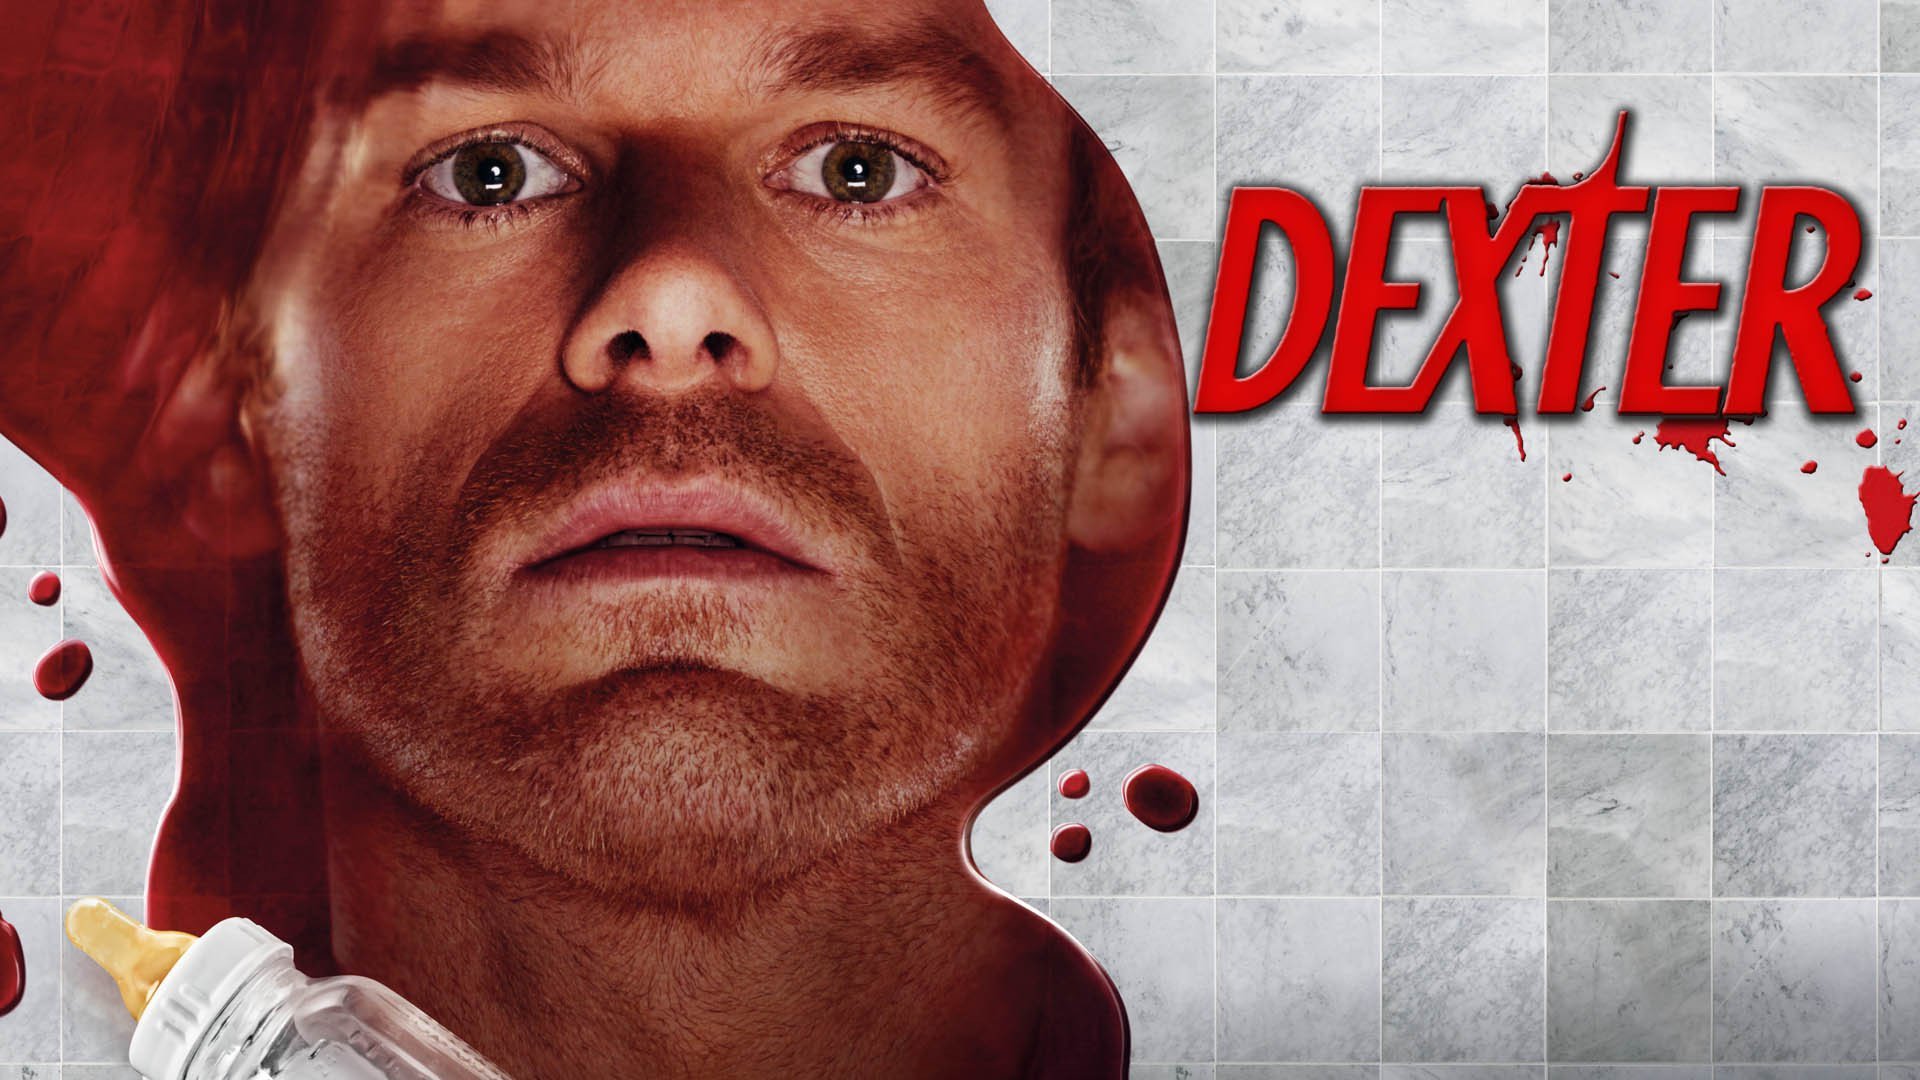 Download hd 1920x1080 Dexter desktop background ID:275837 for free